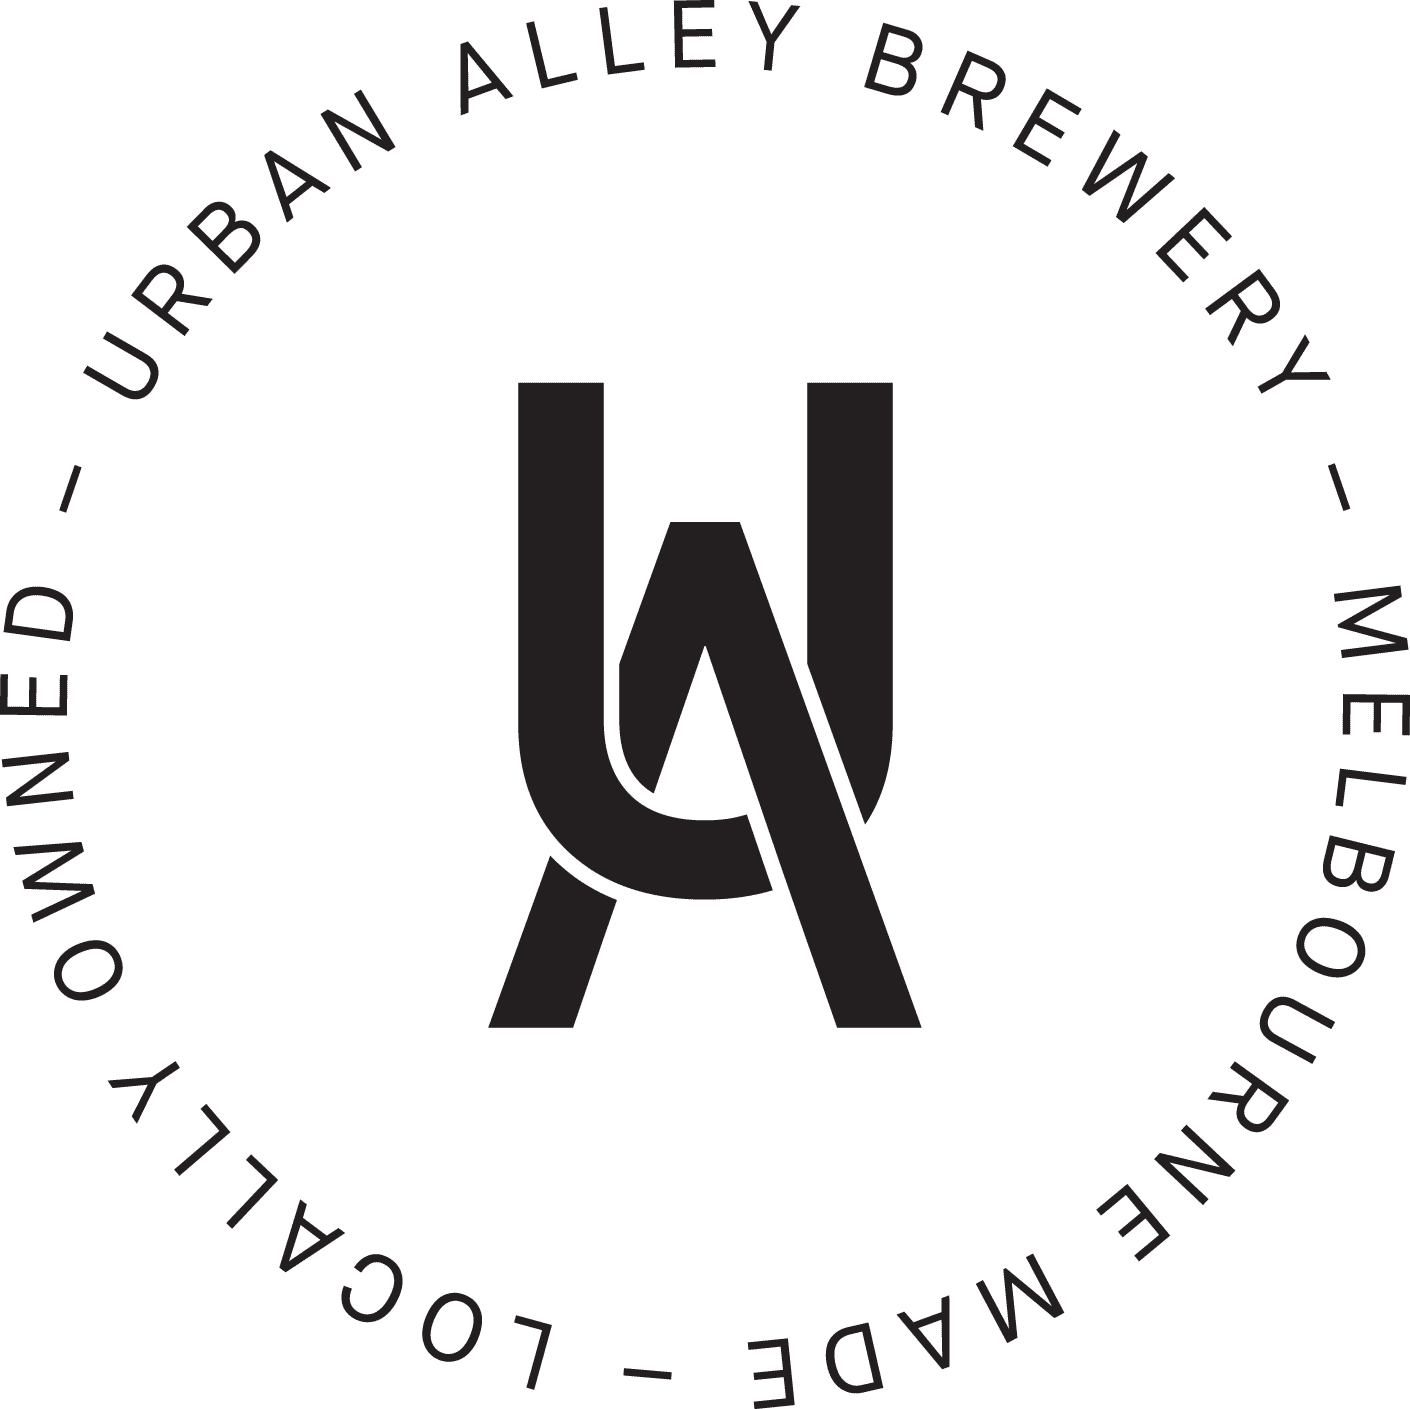 Urban Alley Brewery